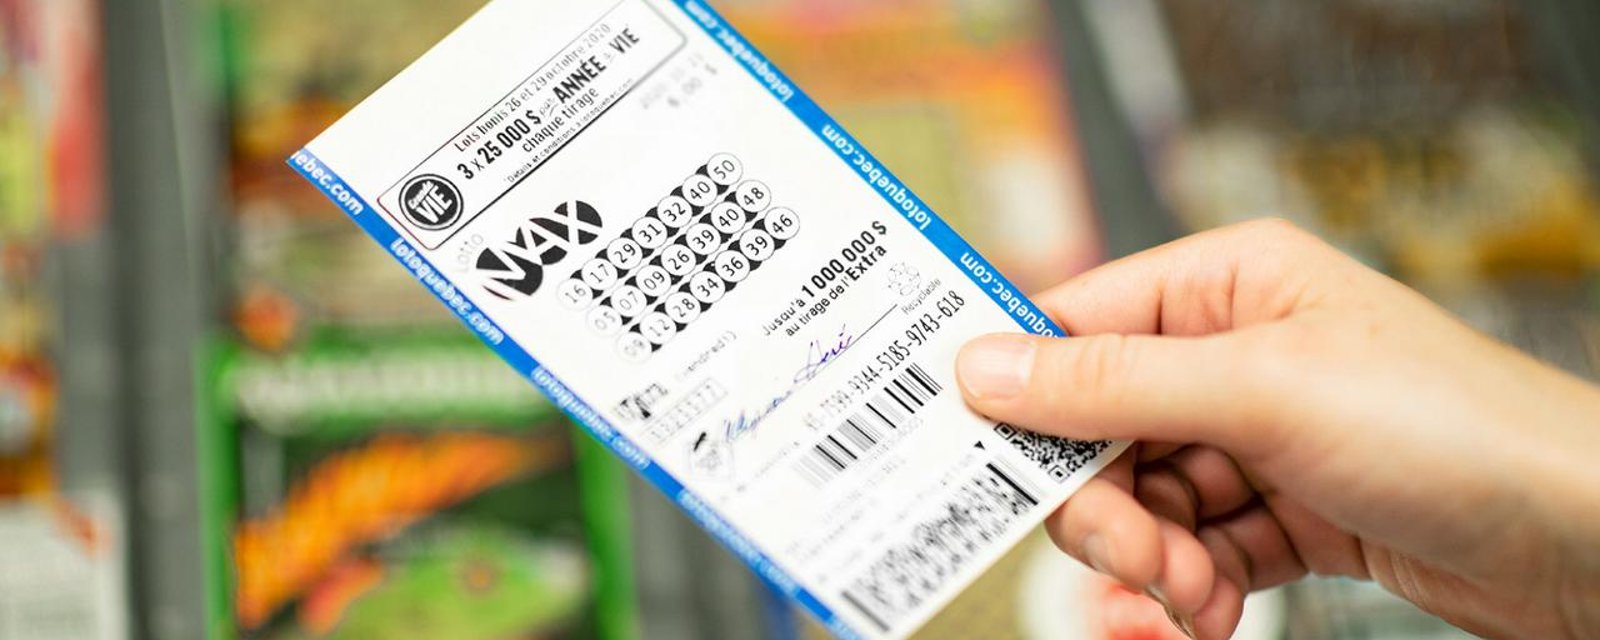 Une immense cagnotte de 73 M$ au prochain tirage de la Lotto Max.